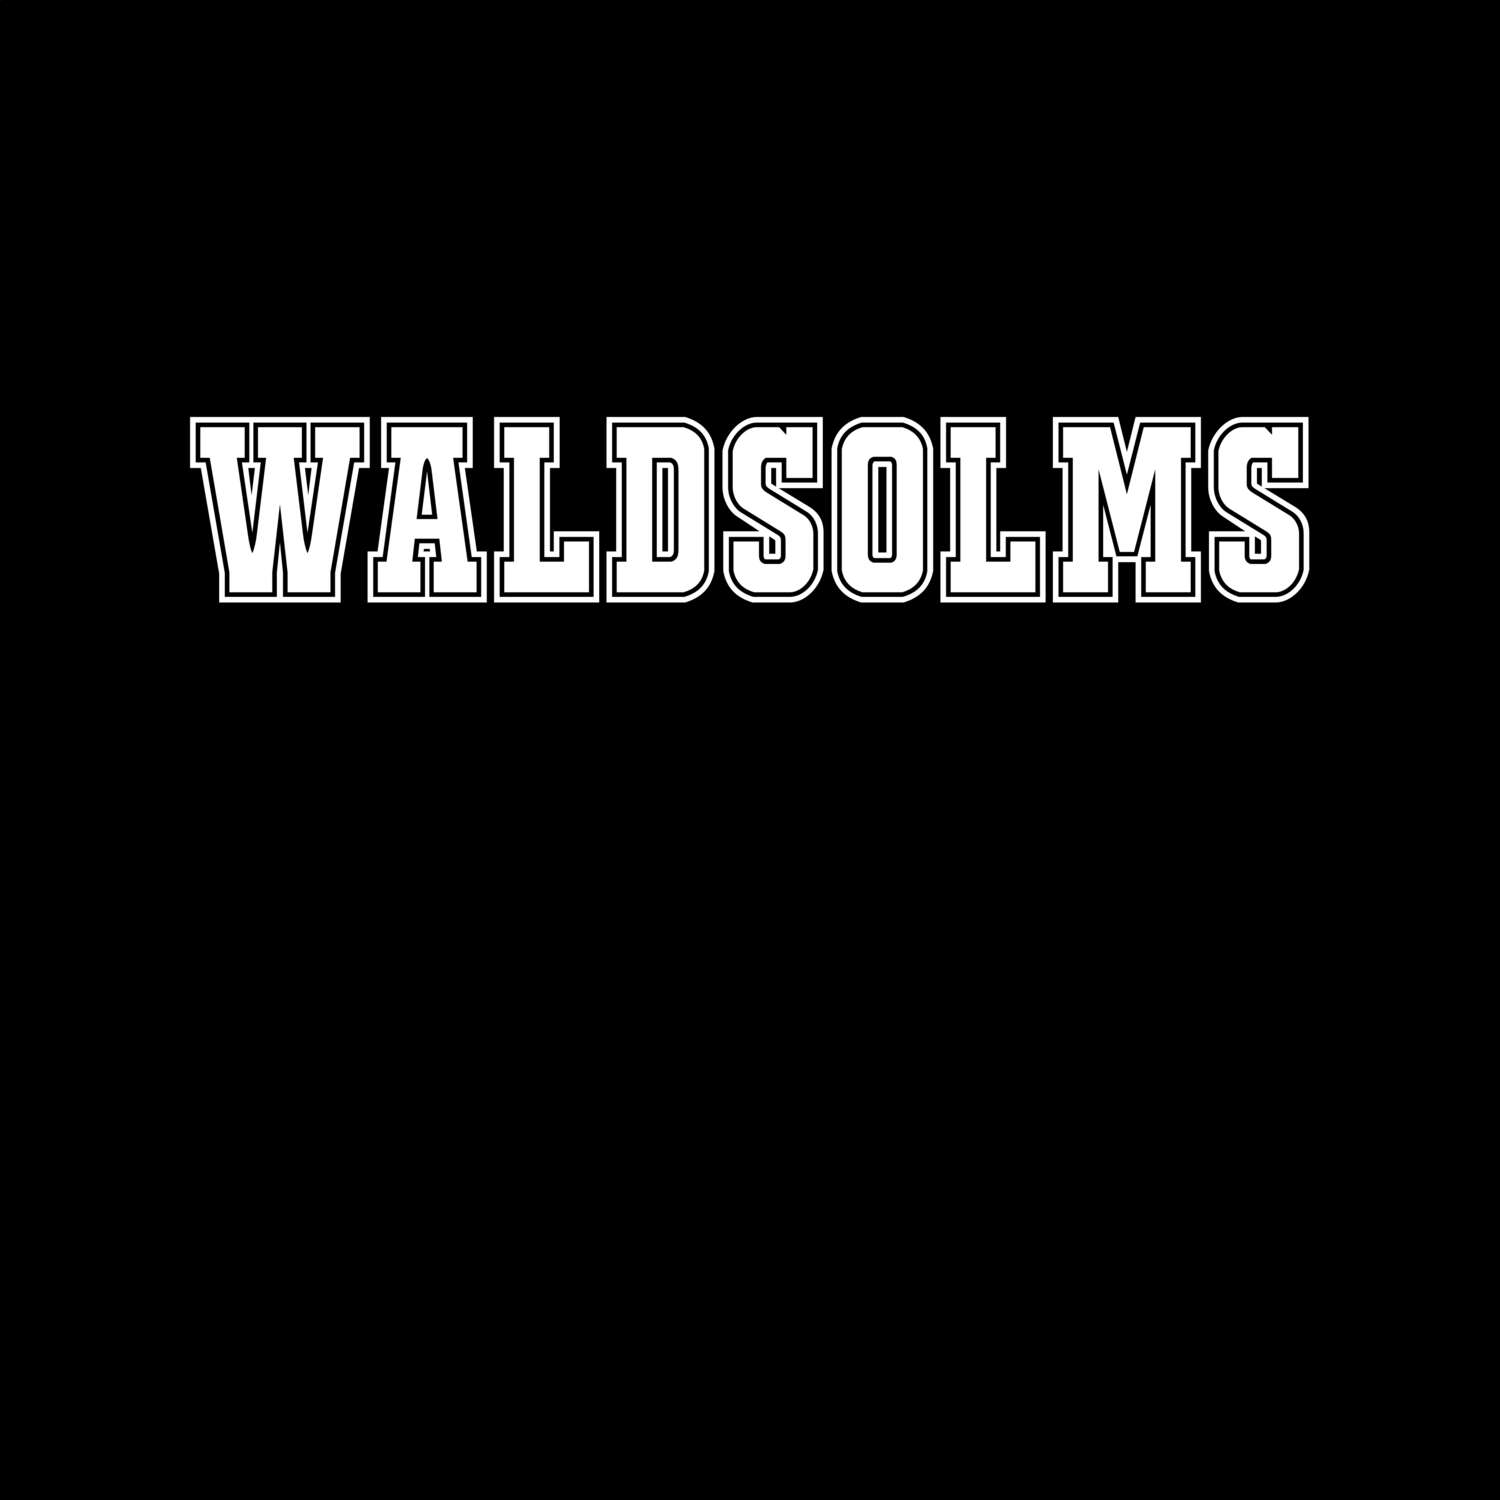 Waldsolms T-Shirt »Classic«